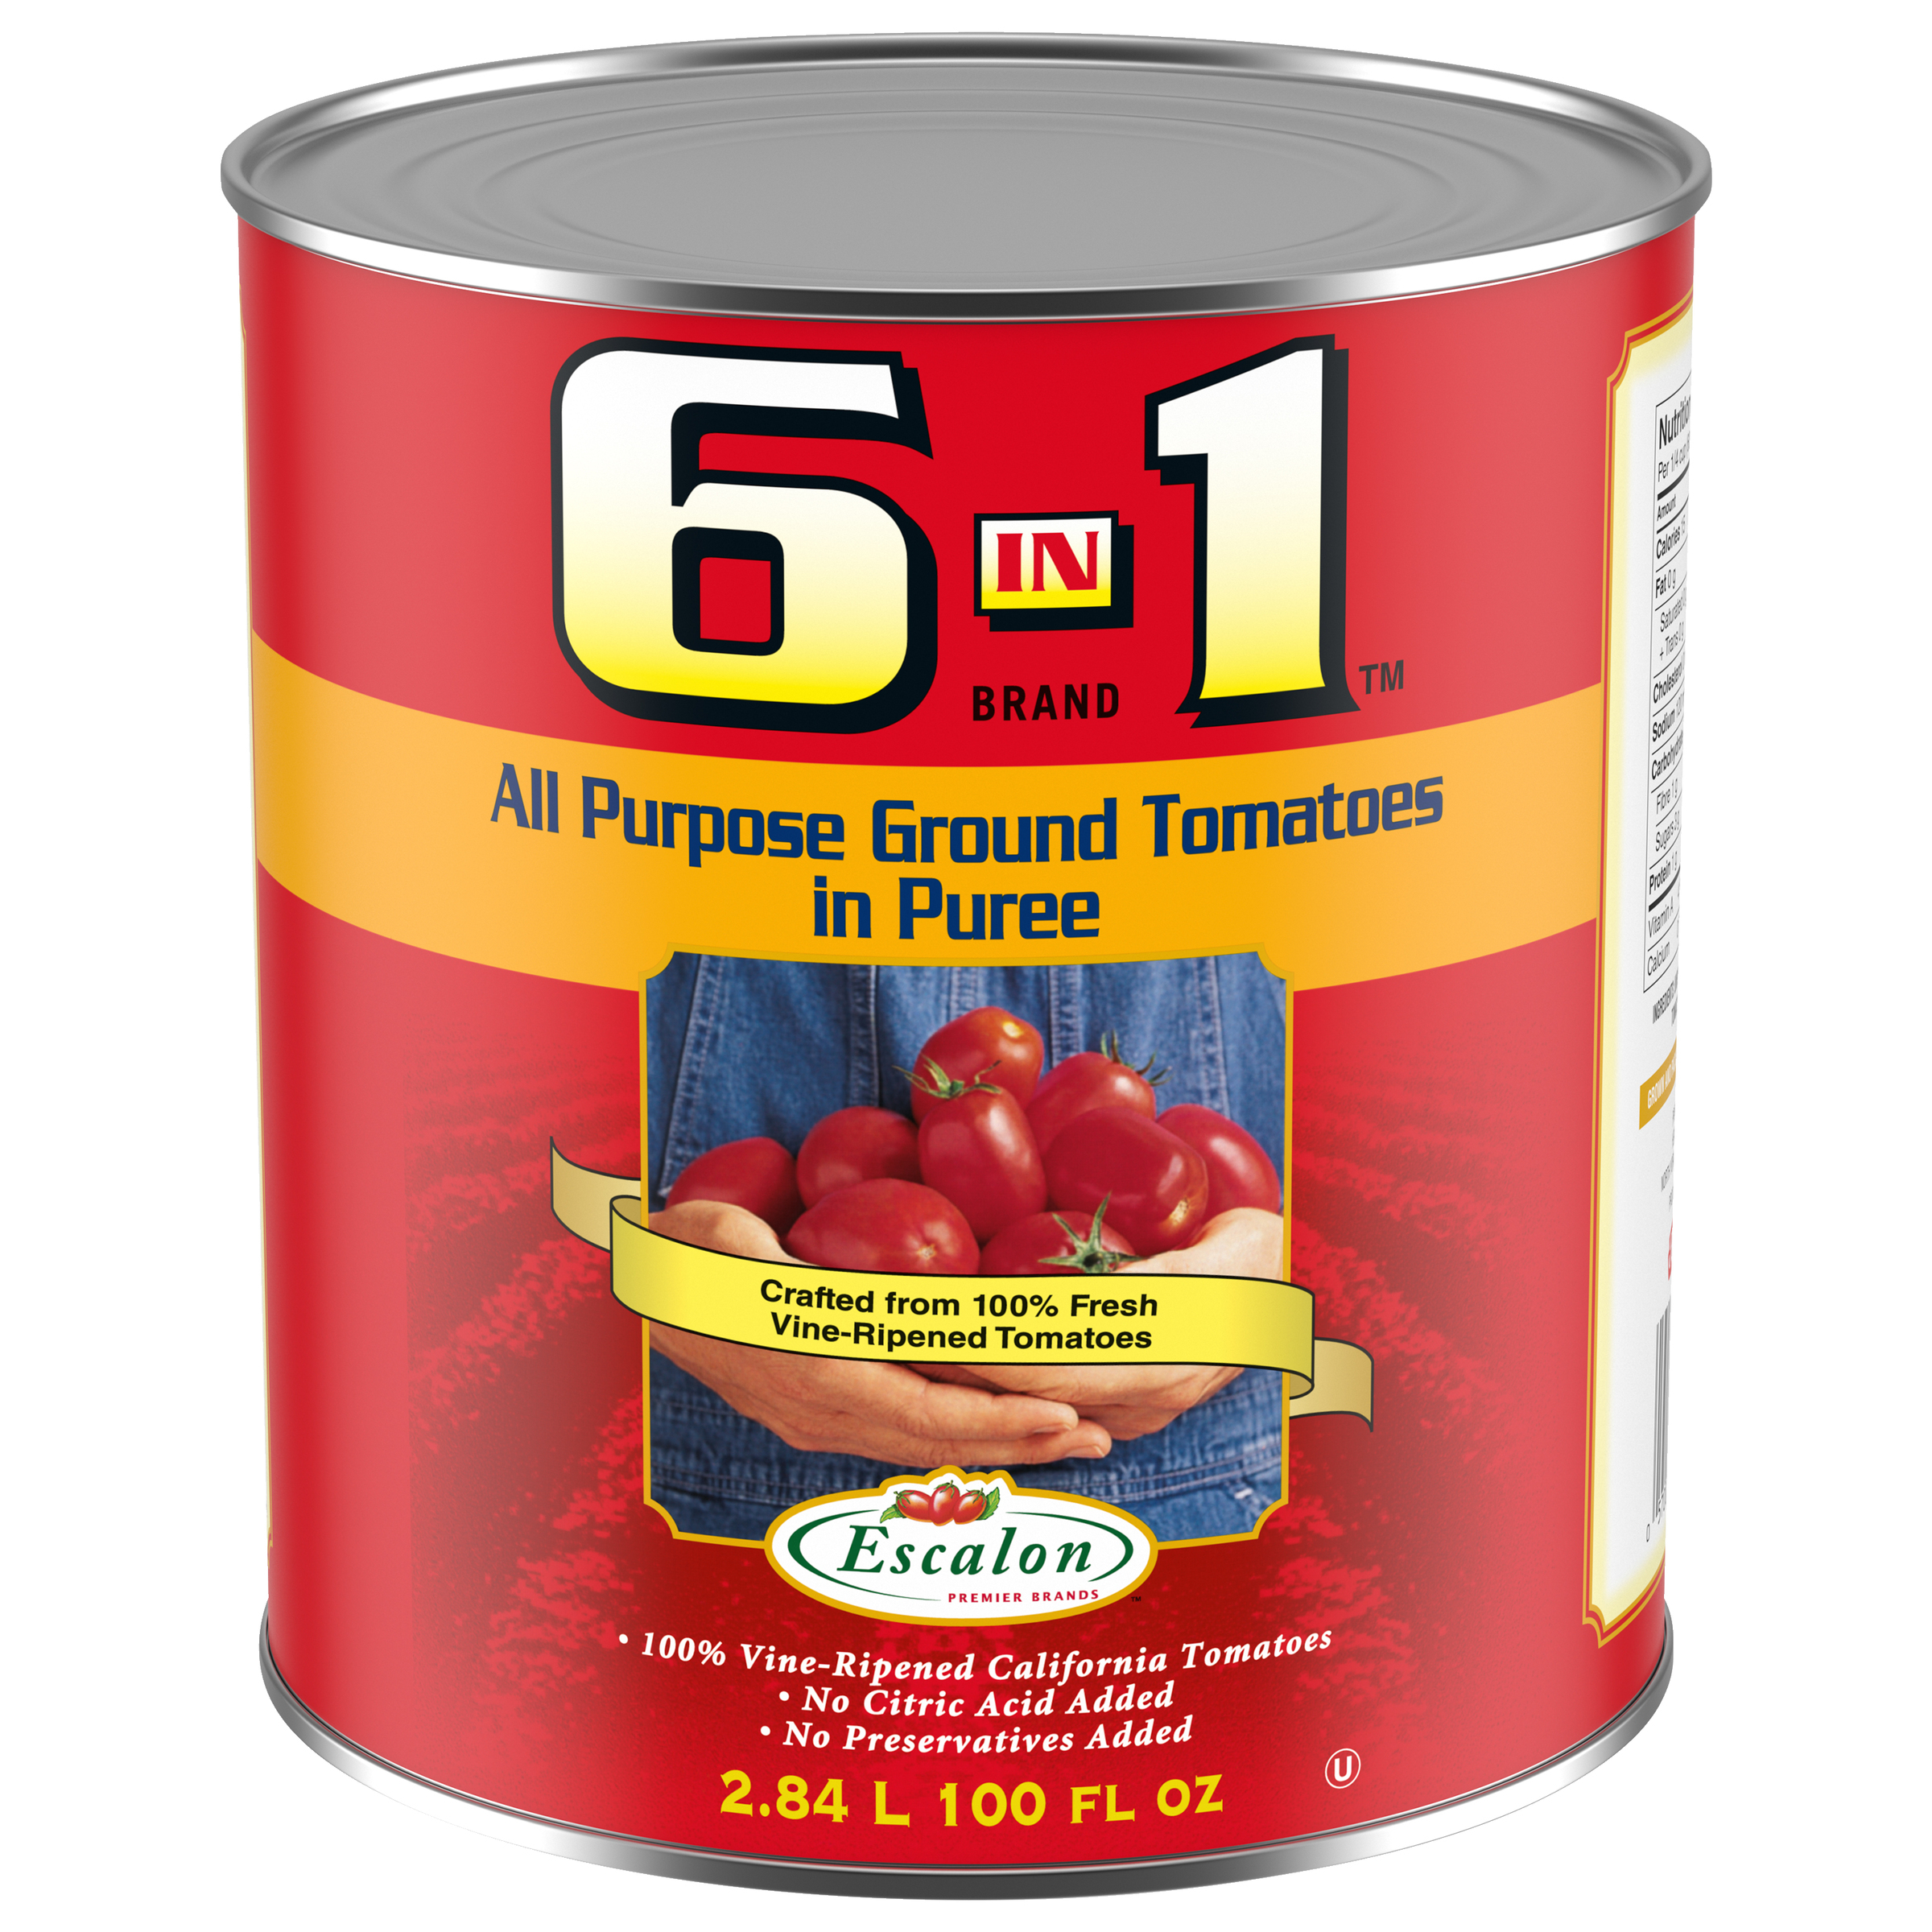 ESCALON tomates broyées tout usage 6 en 1 – 6 x 2,84 L